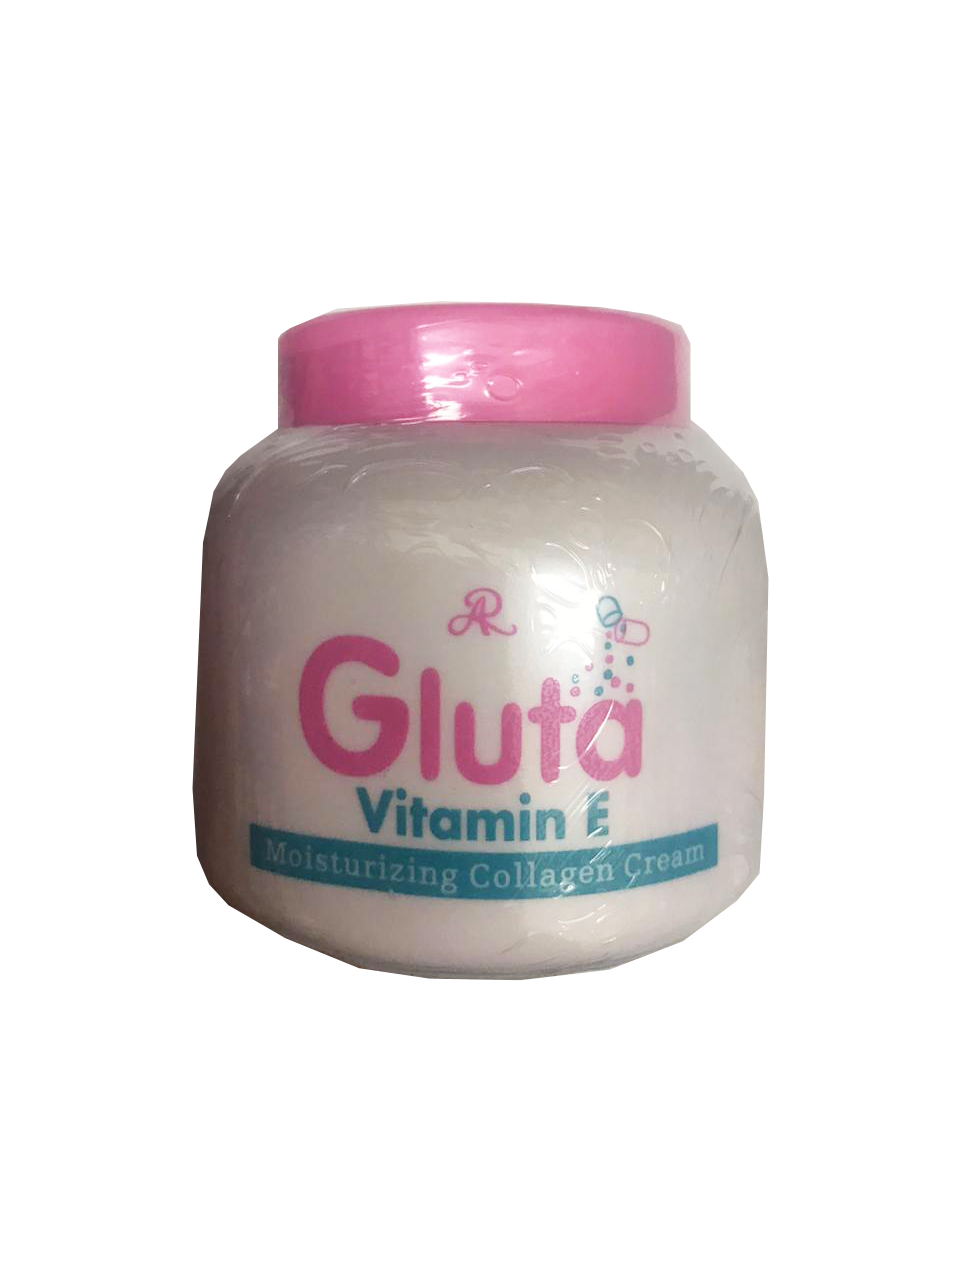 Vitamin E Gluta Moisturizing Collagen Cream